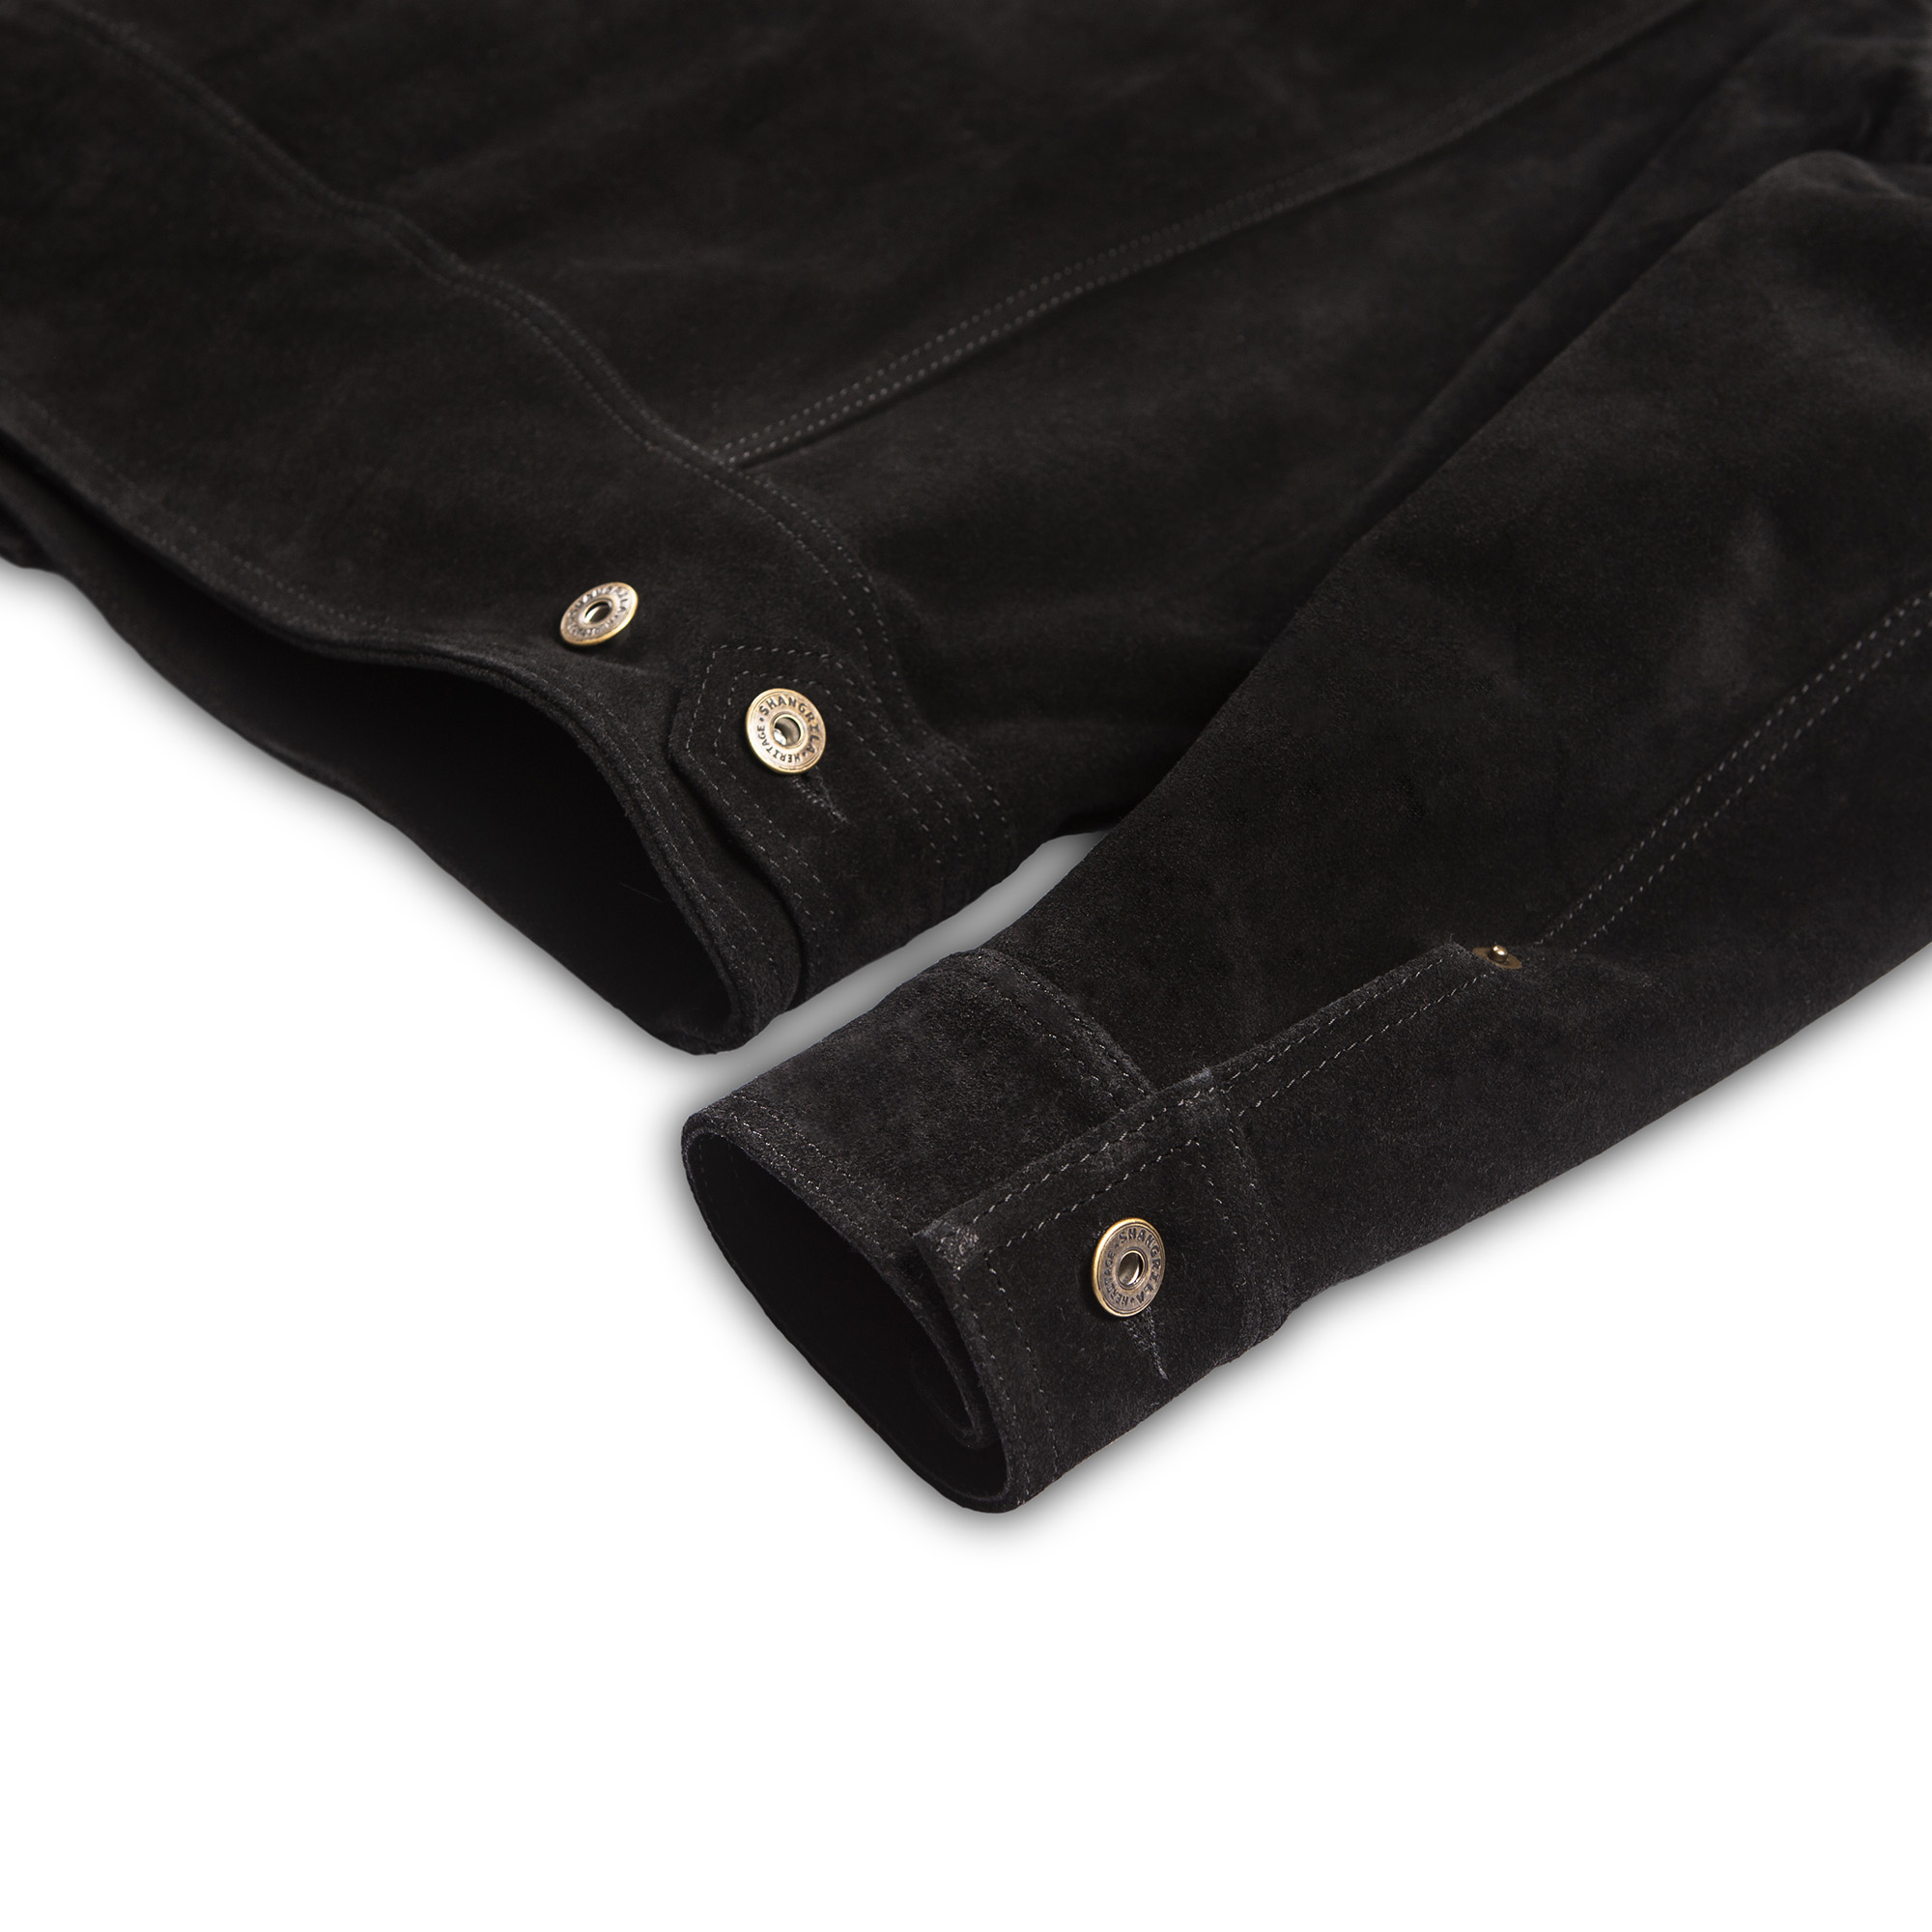 “Terracotta” Black Suede Jacket